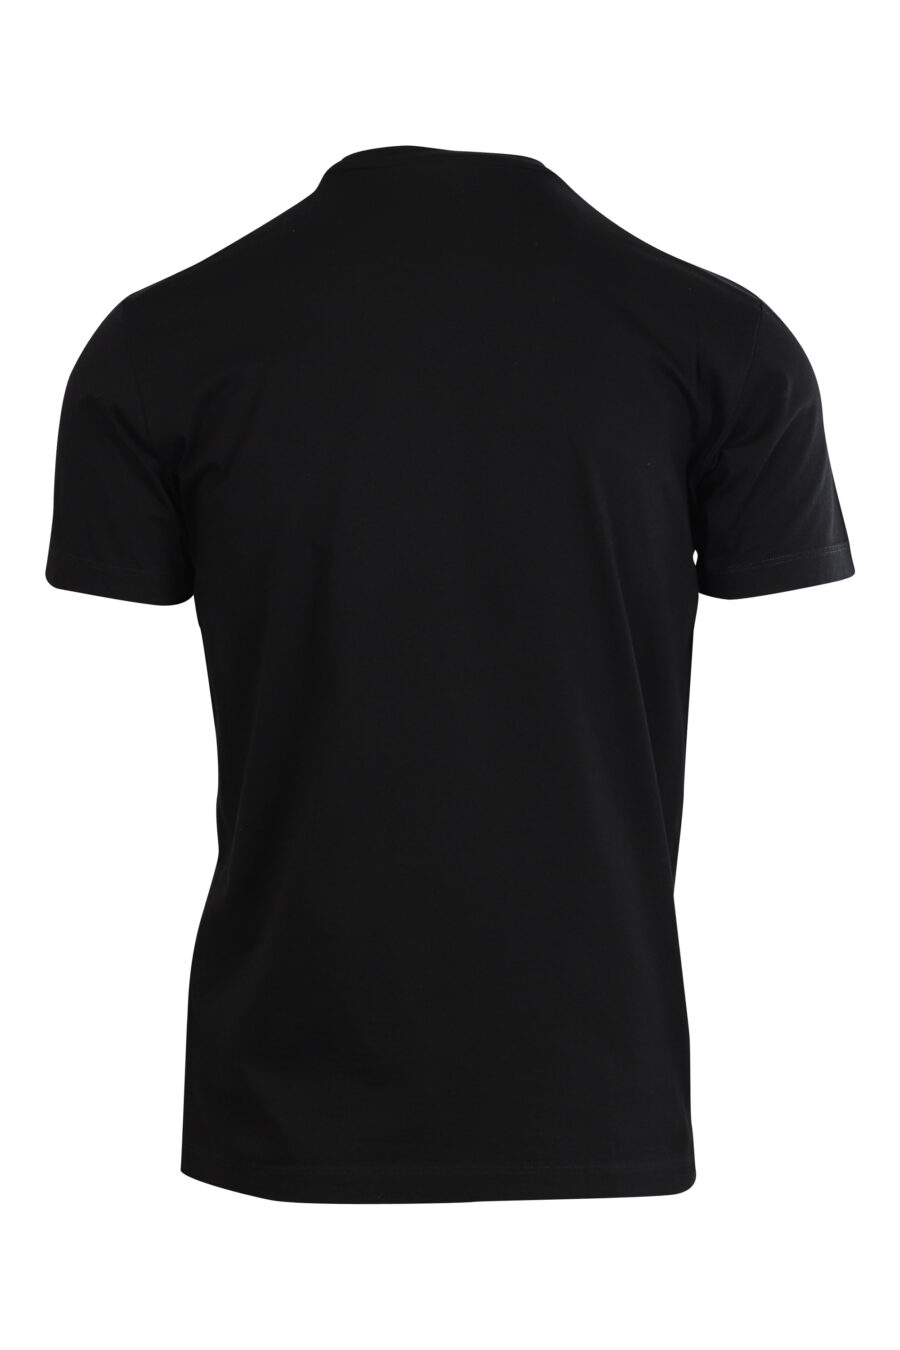 Black T-shirt with turquoise and fuchsia "icon pixeled" maxilogo - 8052134981269 2